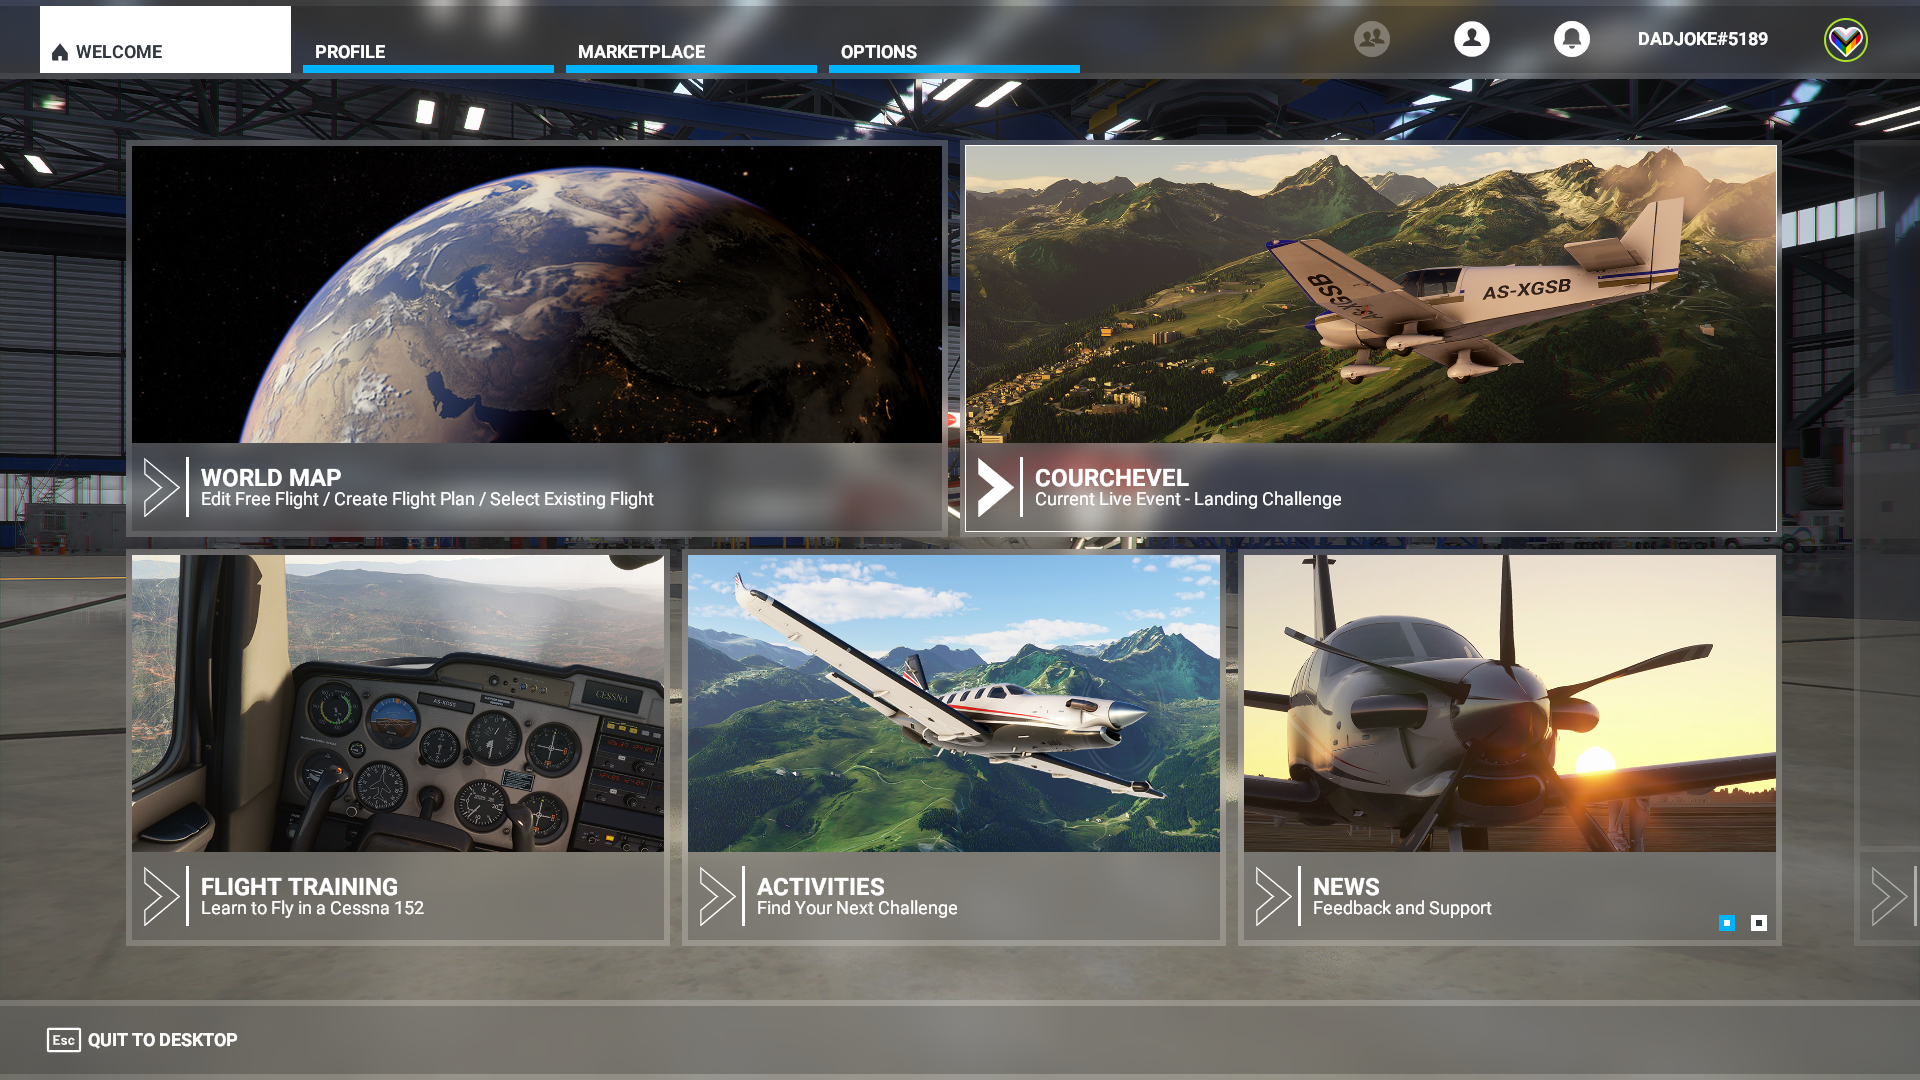 How to Achieve Low Space Flight in Microsoft Flight Simulator 2020